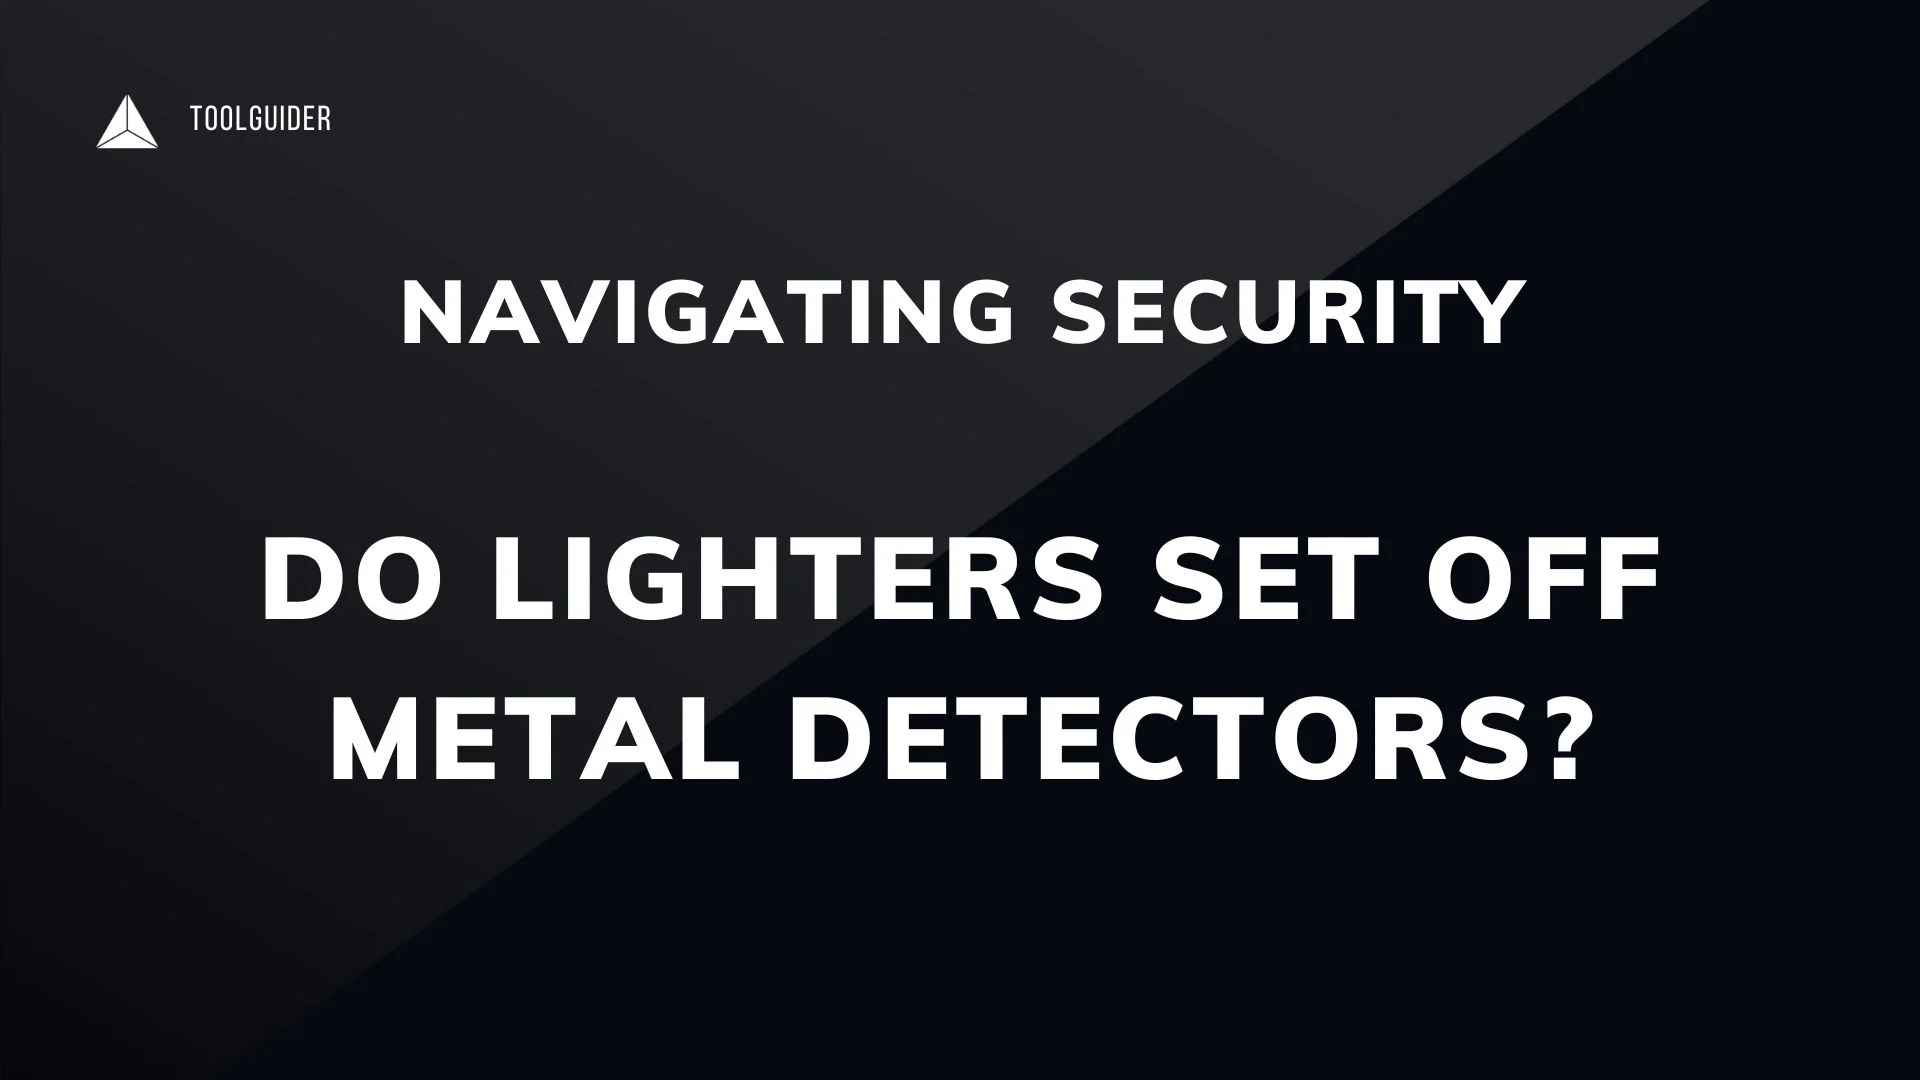 Navigating Security: Do lighters set off metal detectors?